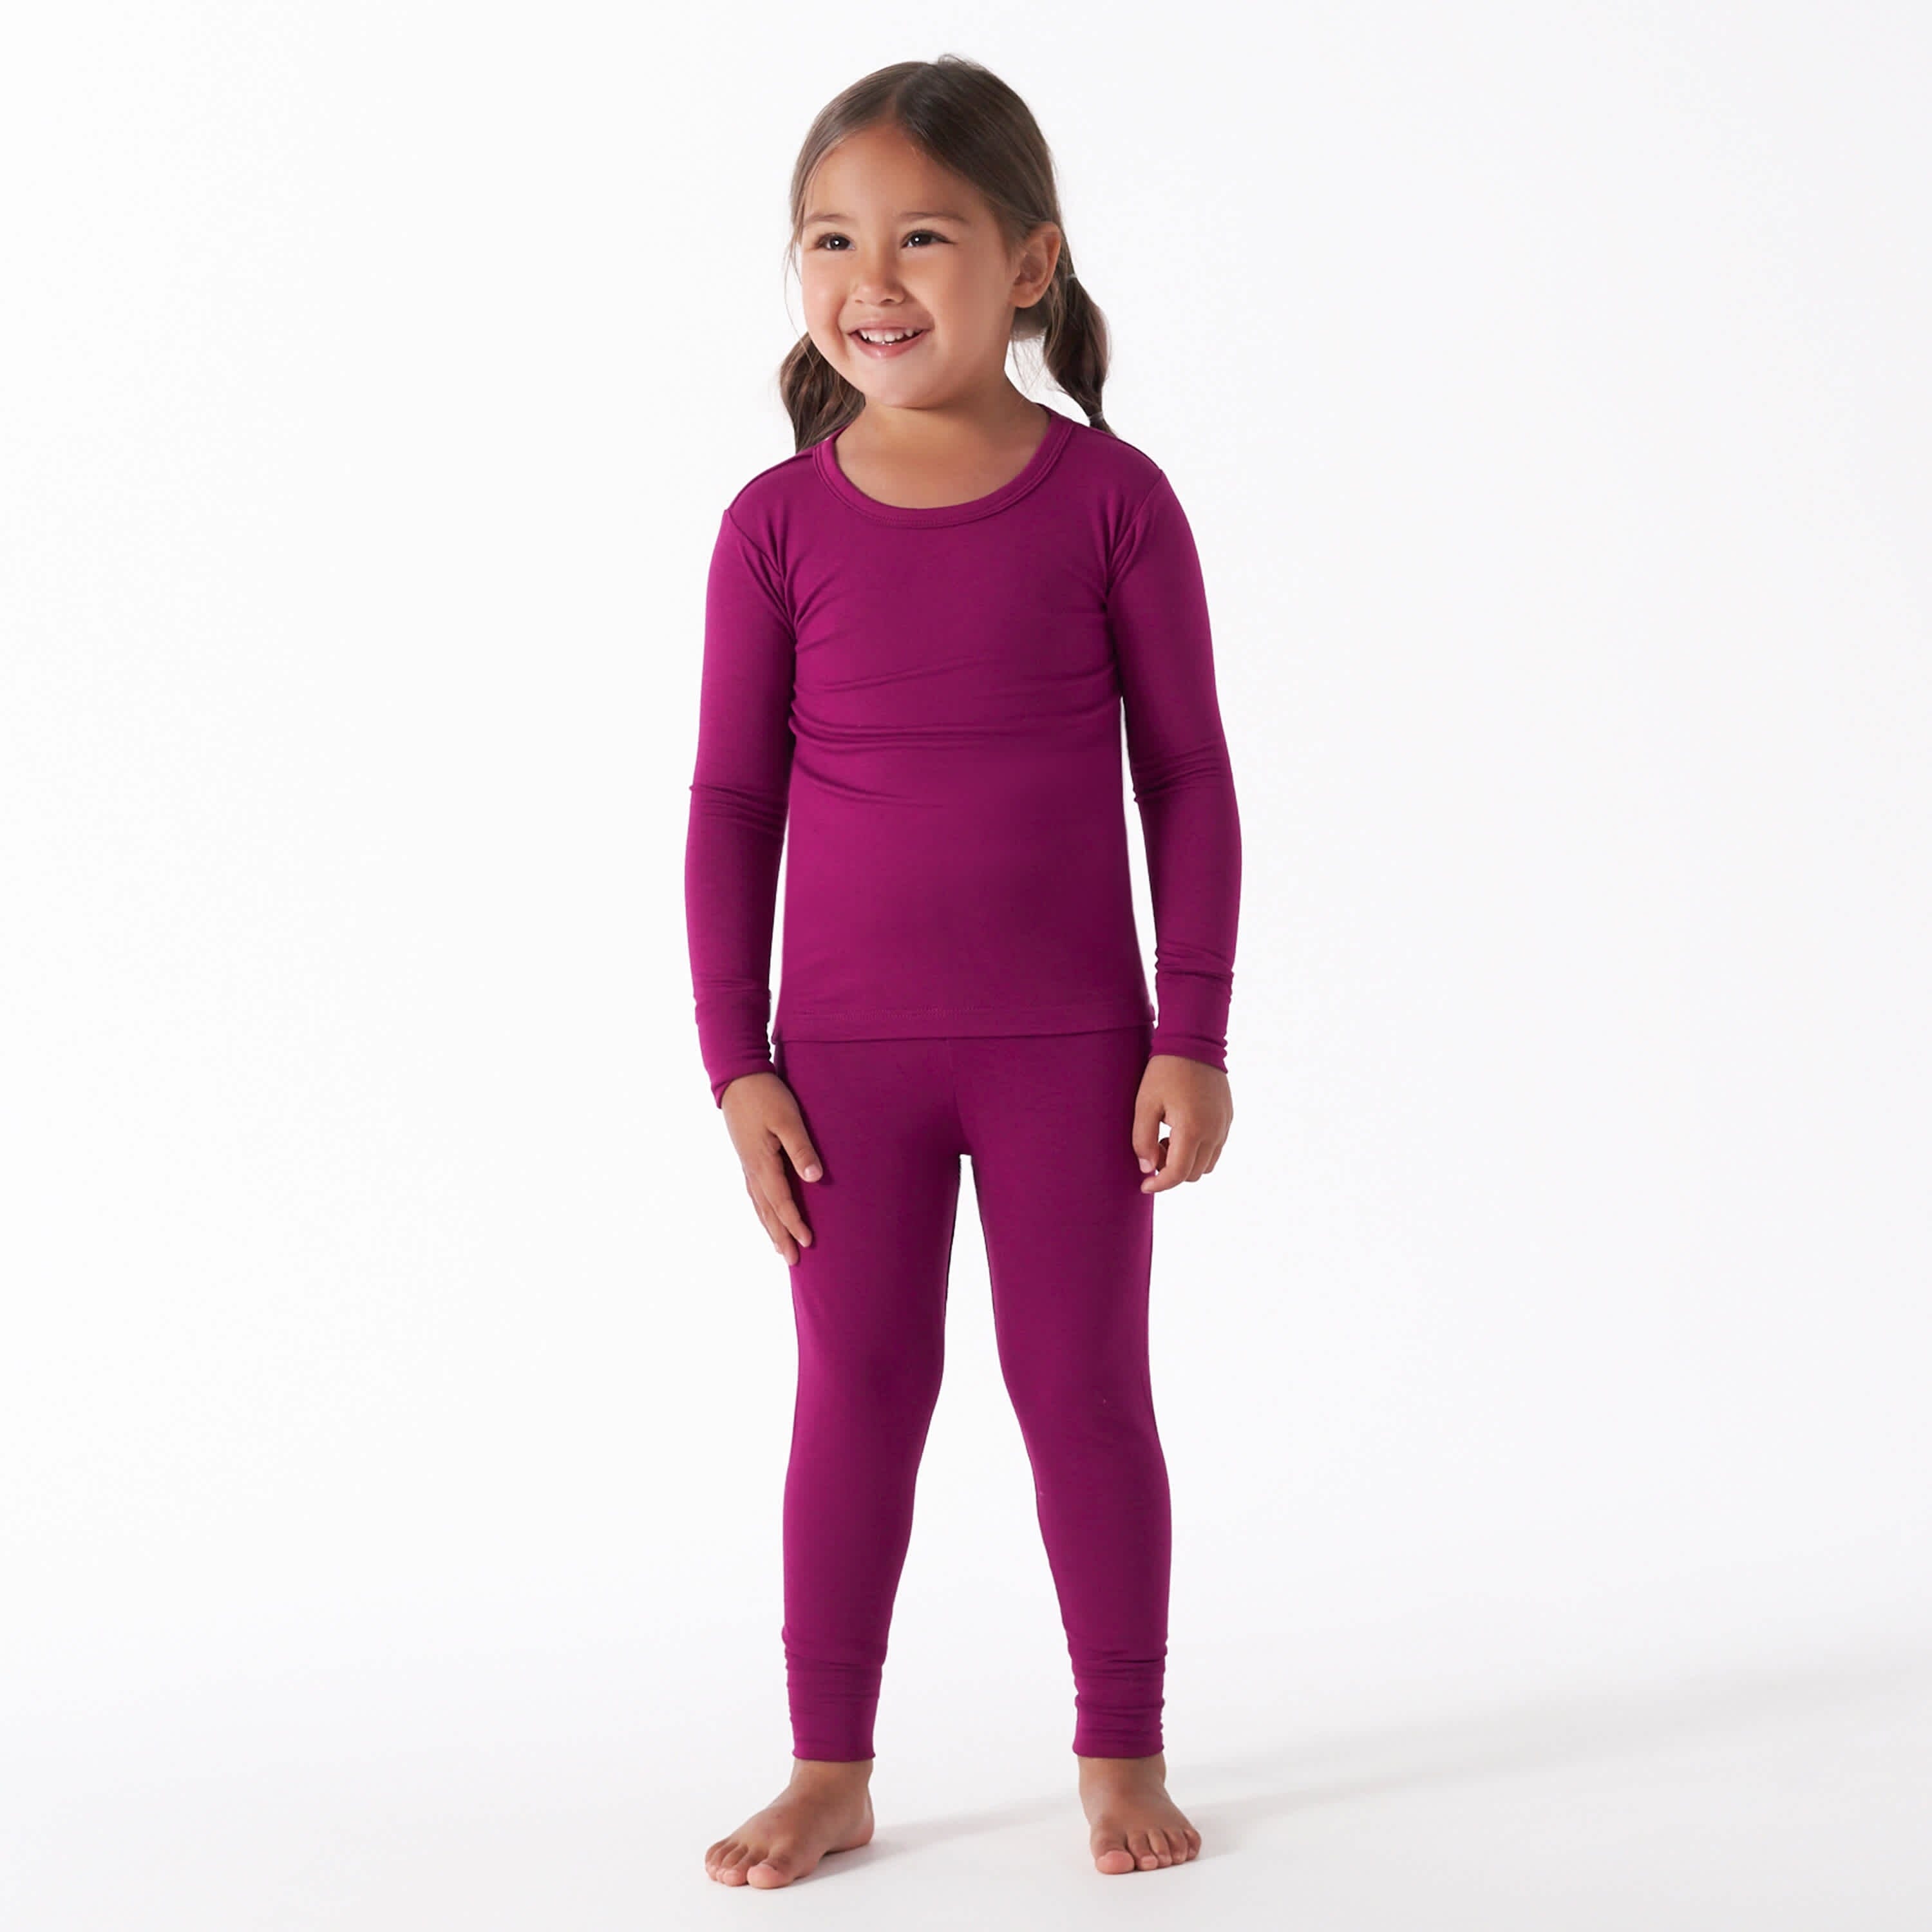 Kids Girls Pyjamas Children PJs 2 Piece Soft Sleepwear Loungewear